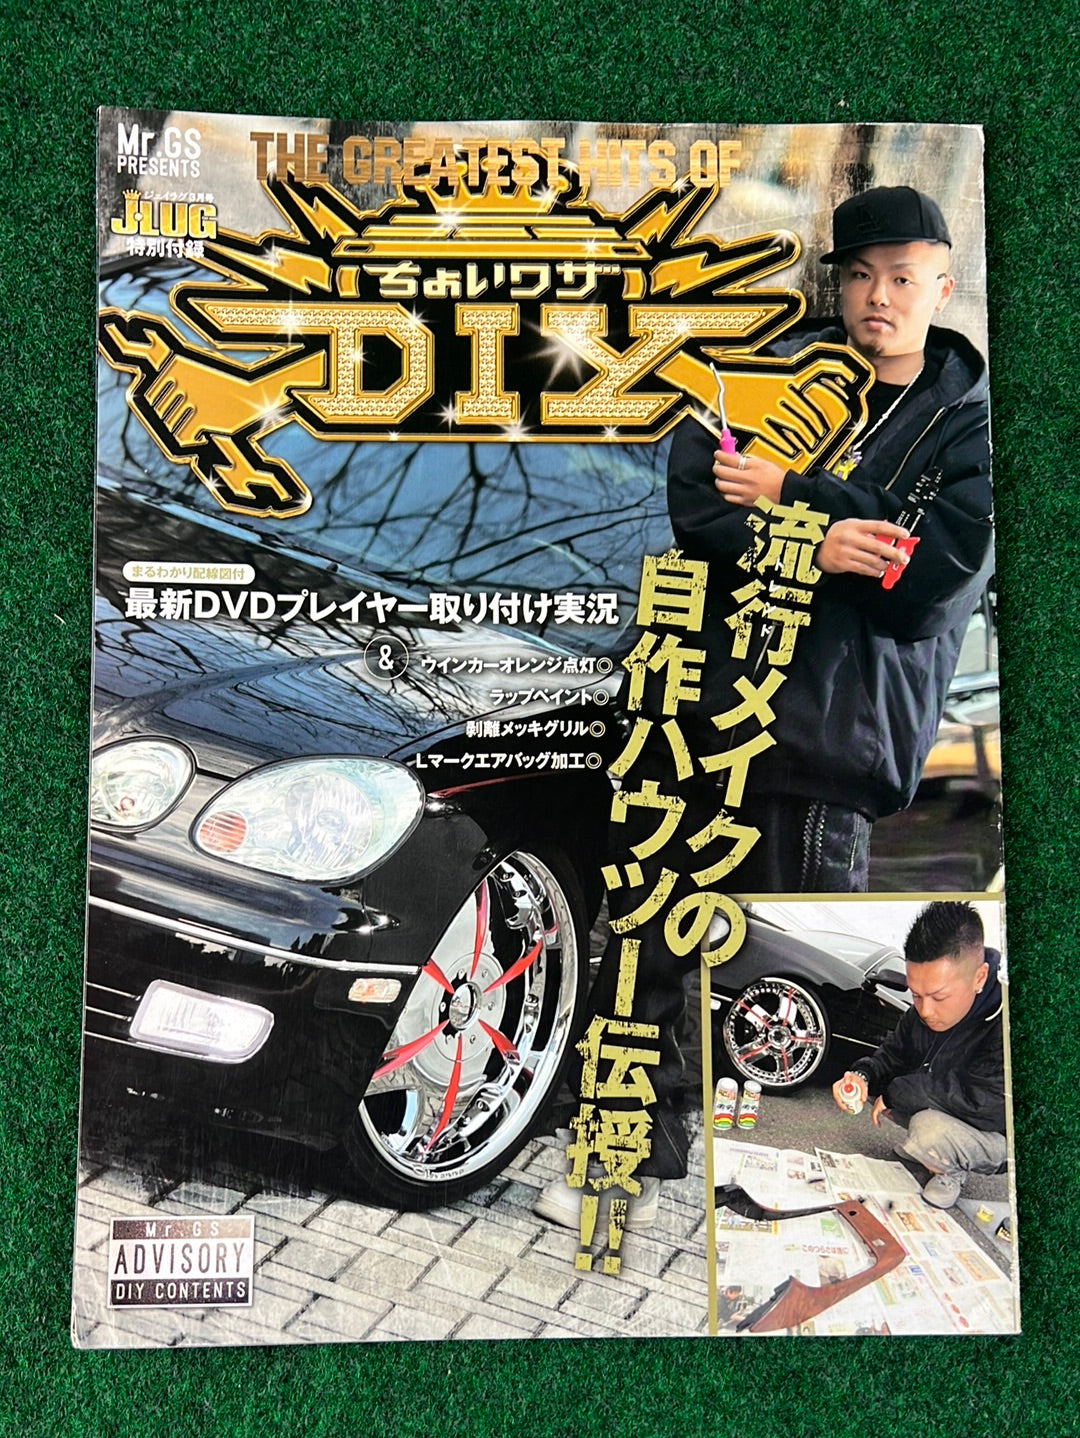 J-LUG Car Magazine - February & March 2008 Set of 2